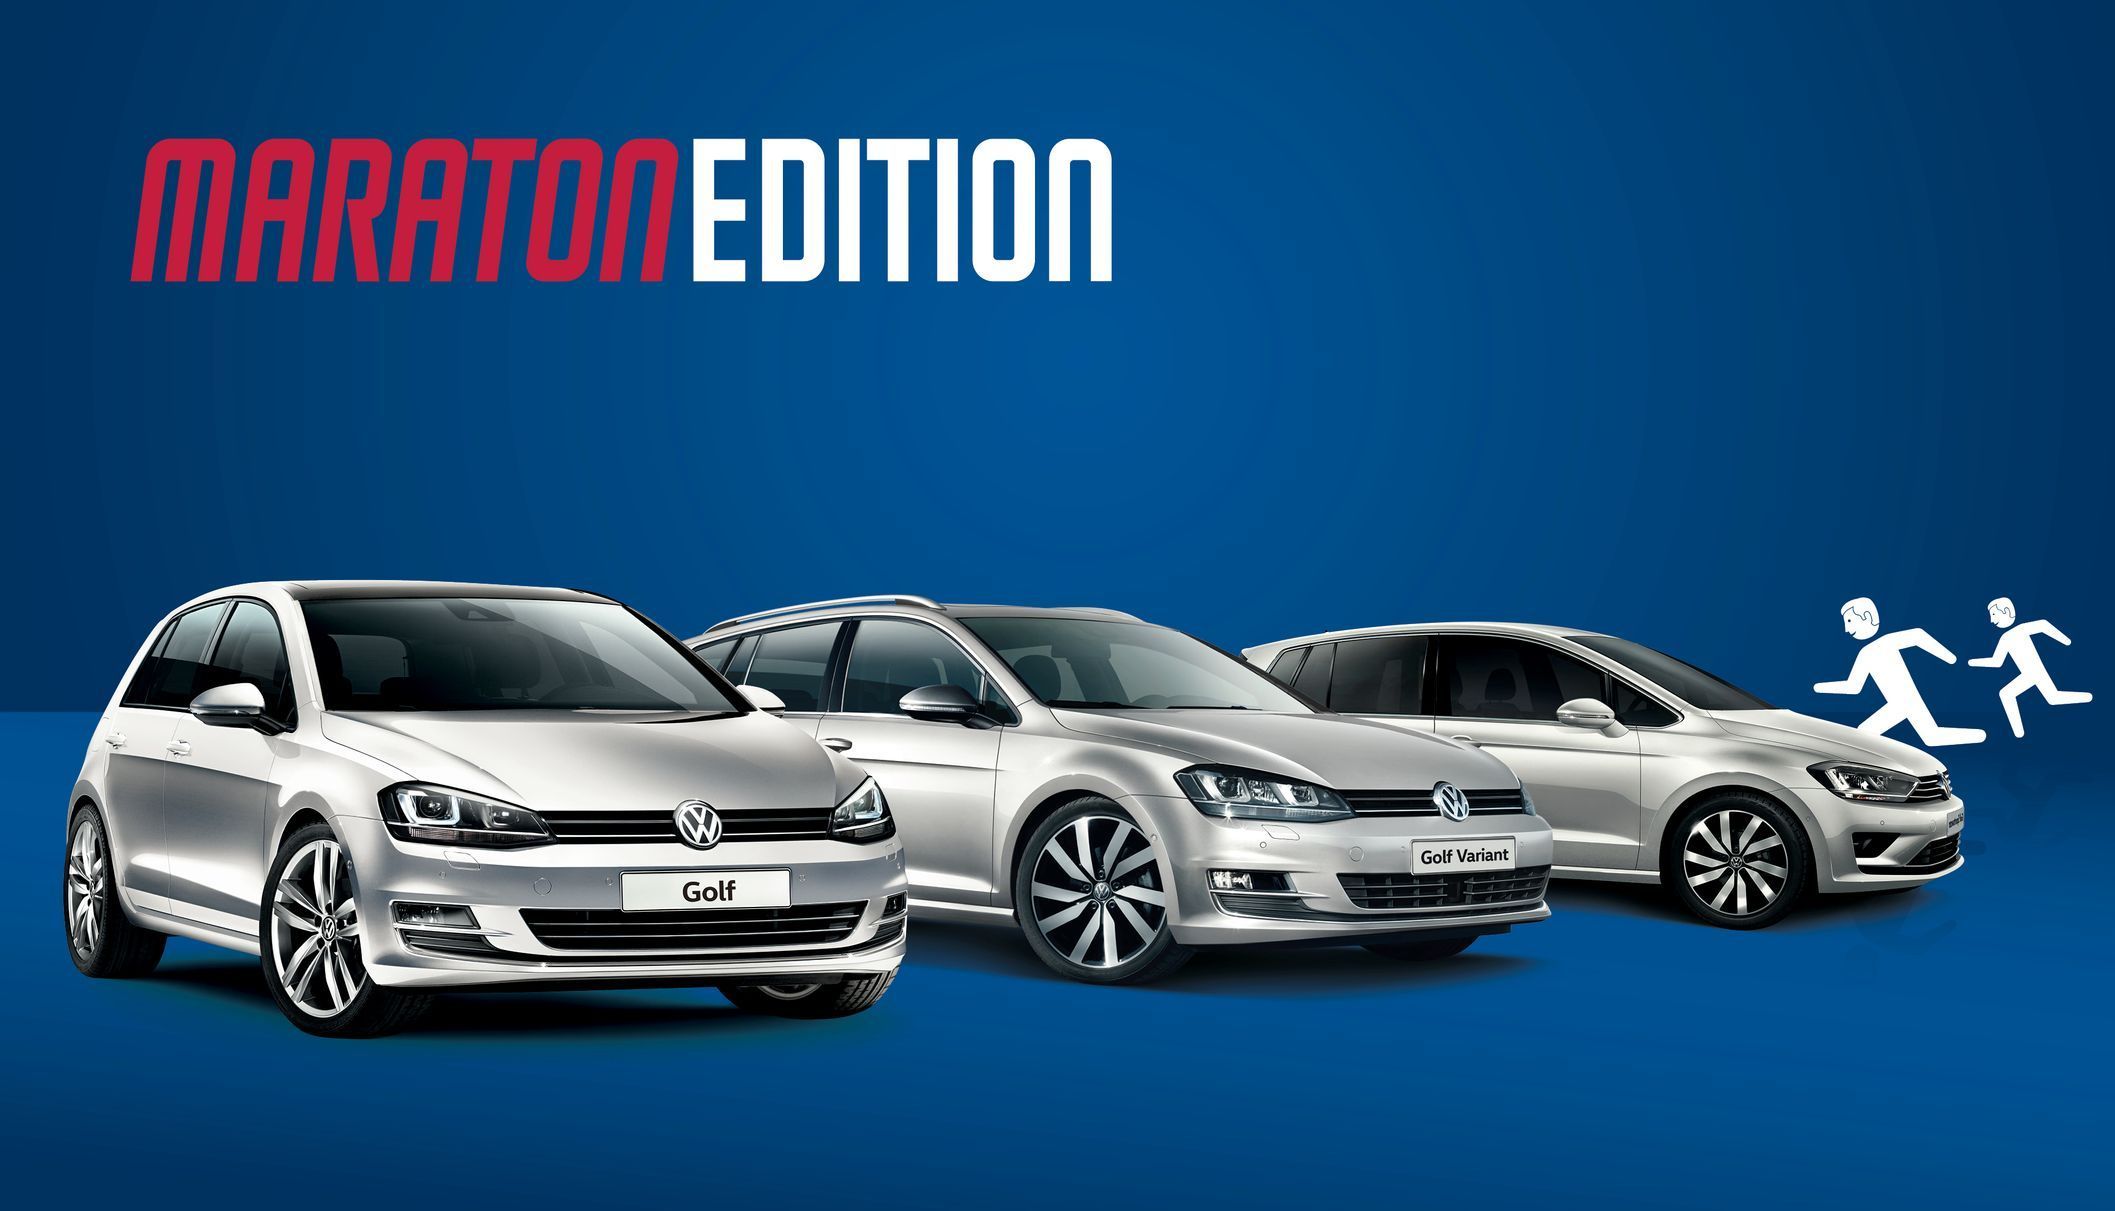 Volkswagen Maraton Edition